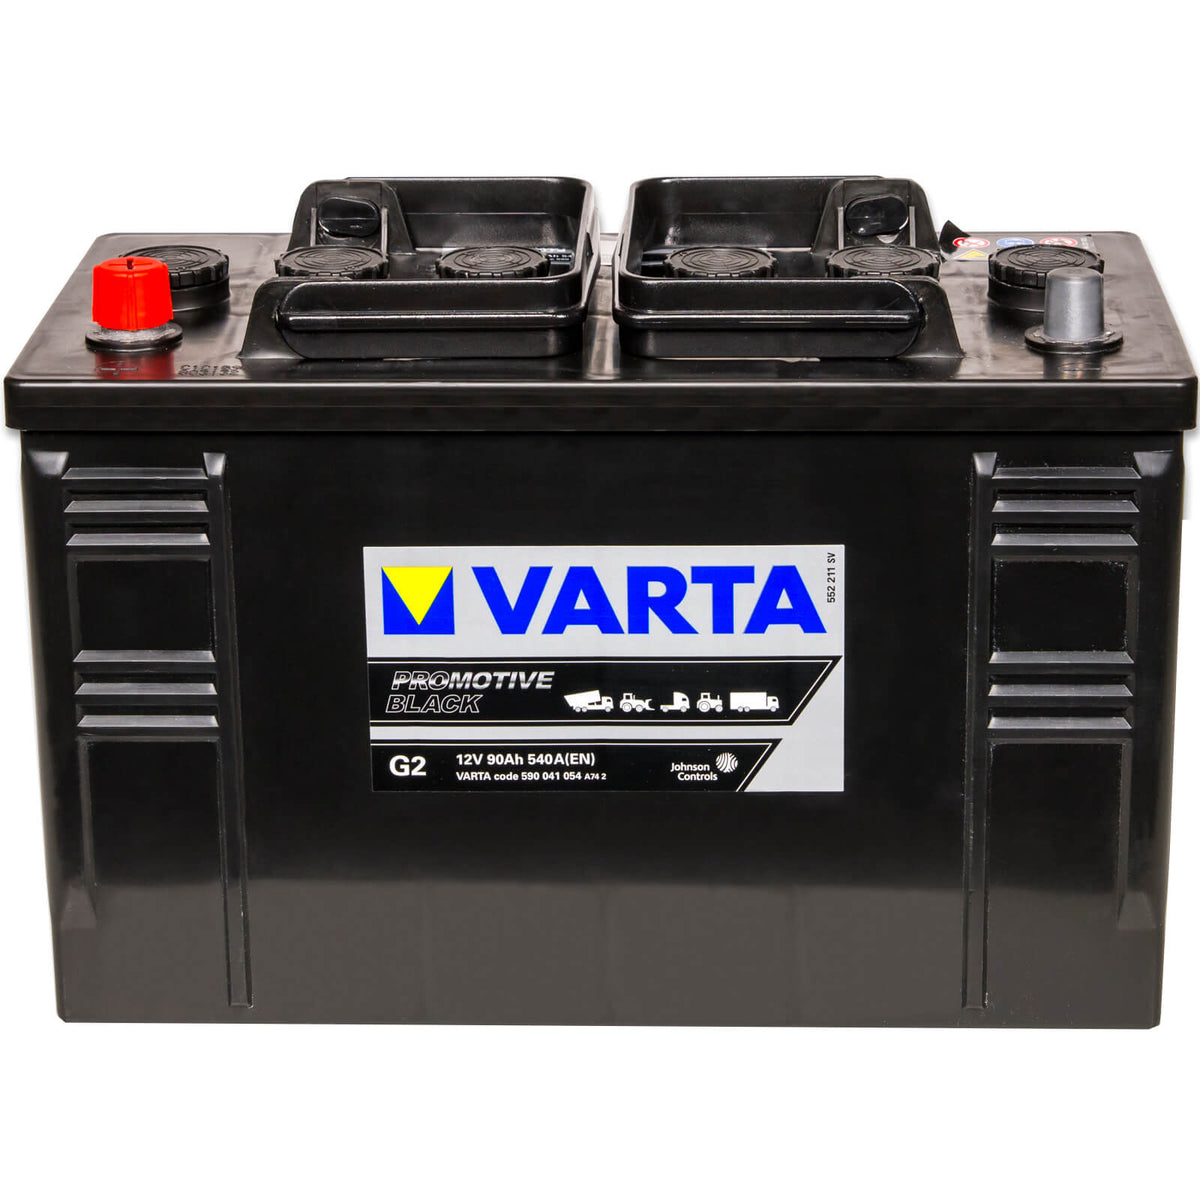 Varta G2 Promotive Black 12V 90Ah 540A/EN